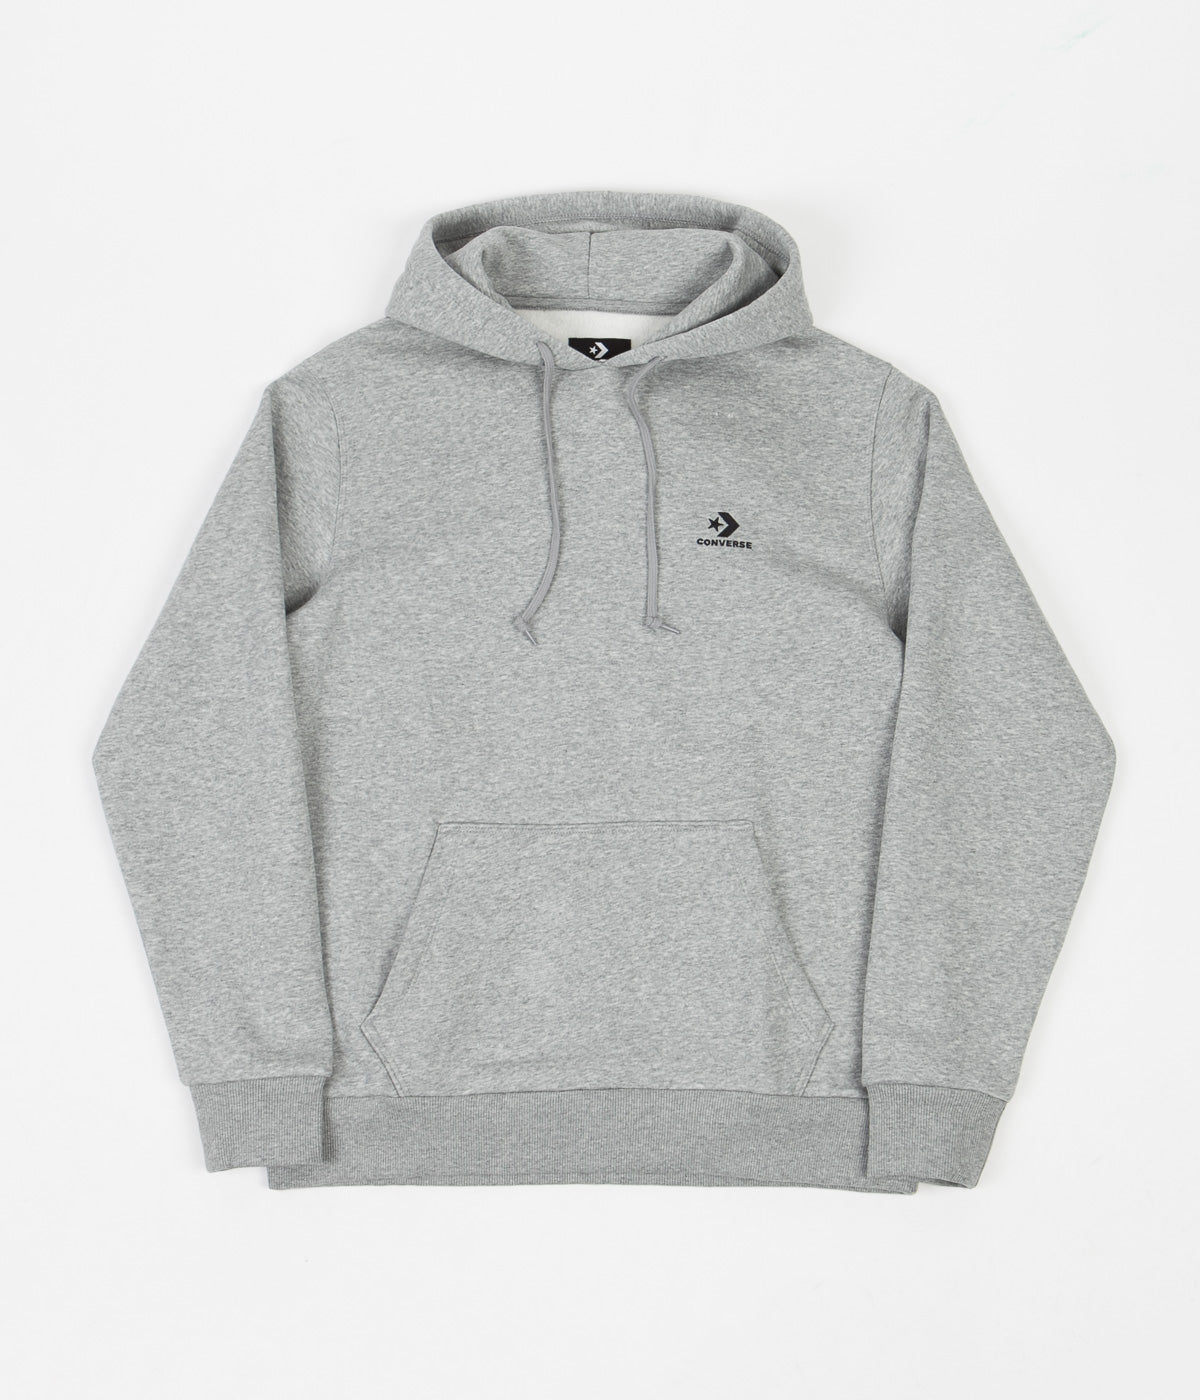 nike embroidered logo hoodie